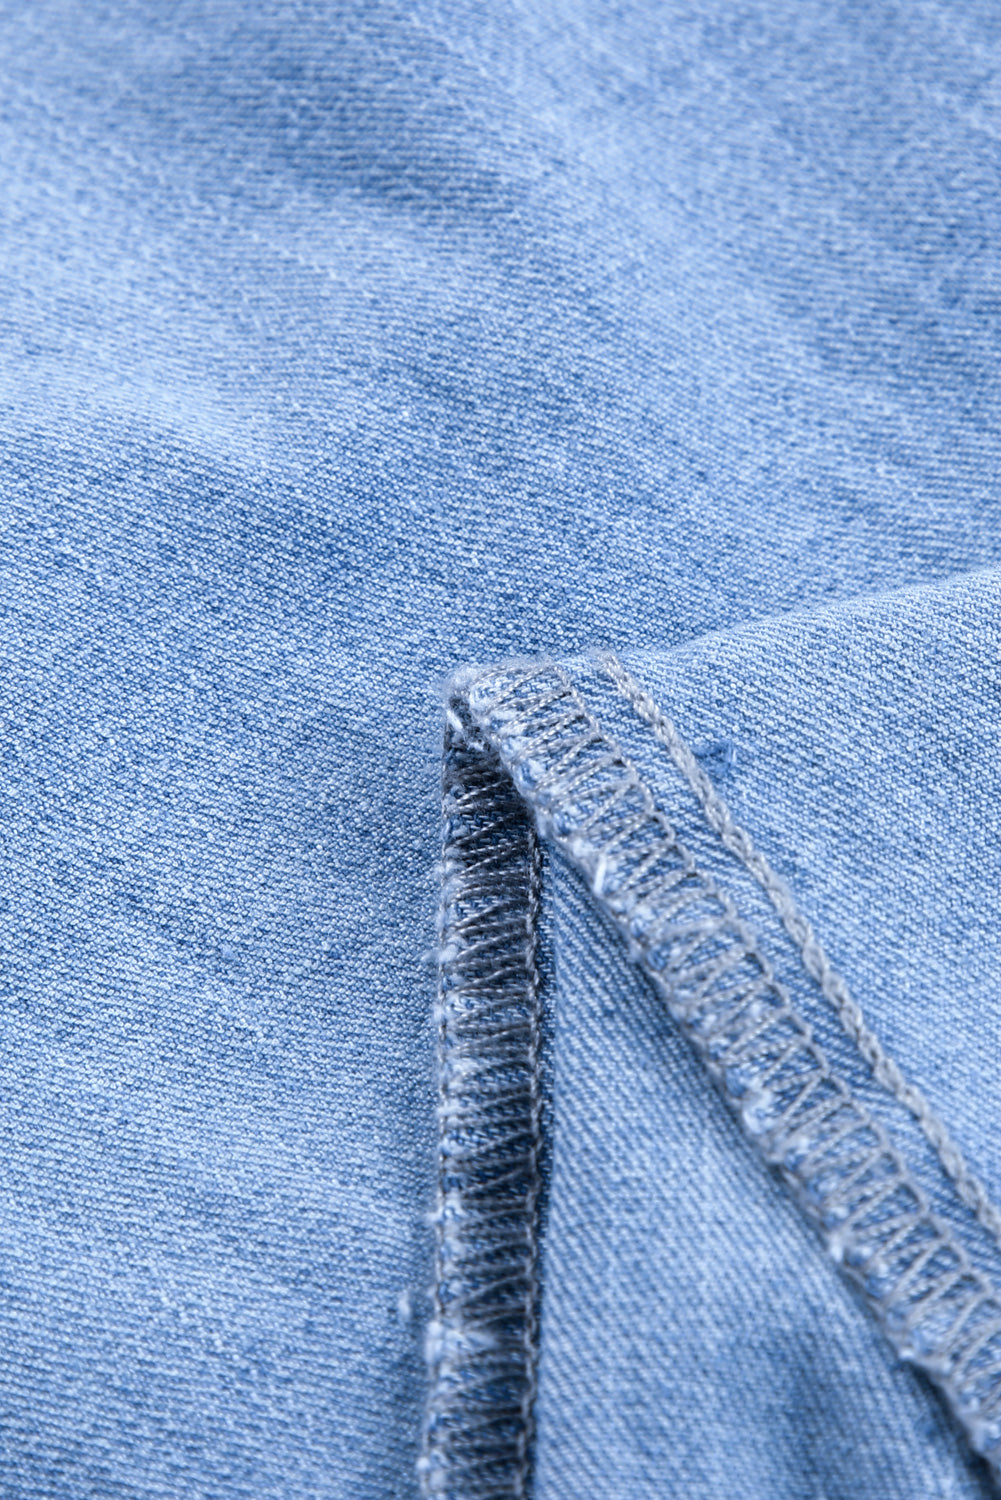 Sky Blue Pocketed Distressed Denim Joggers Jeans JT's Designer Fashion